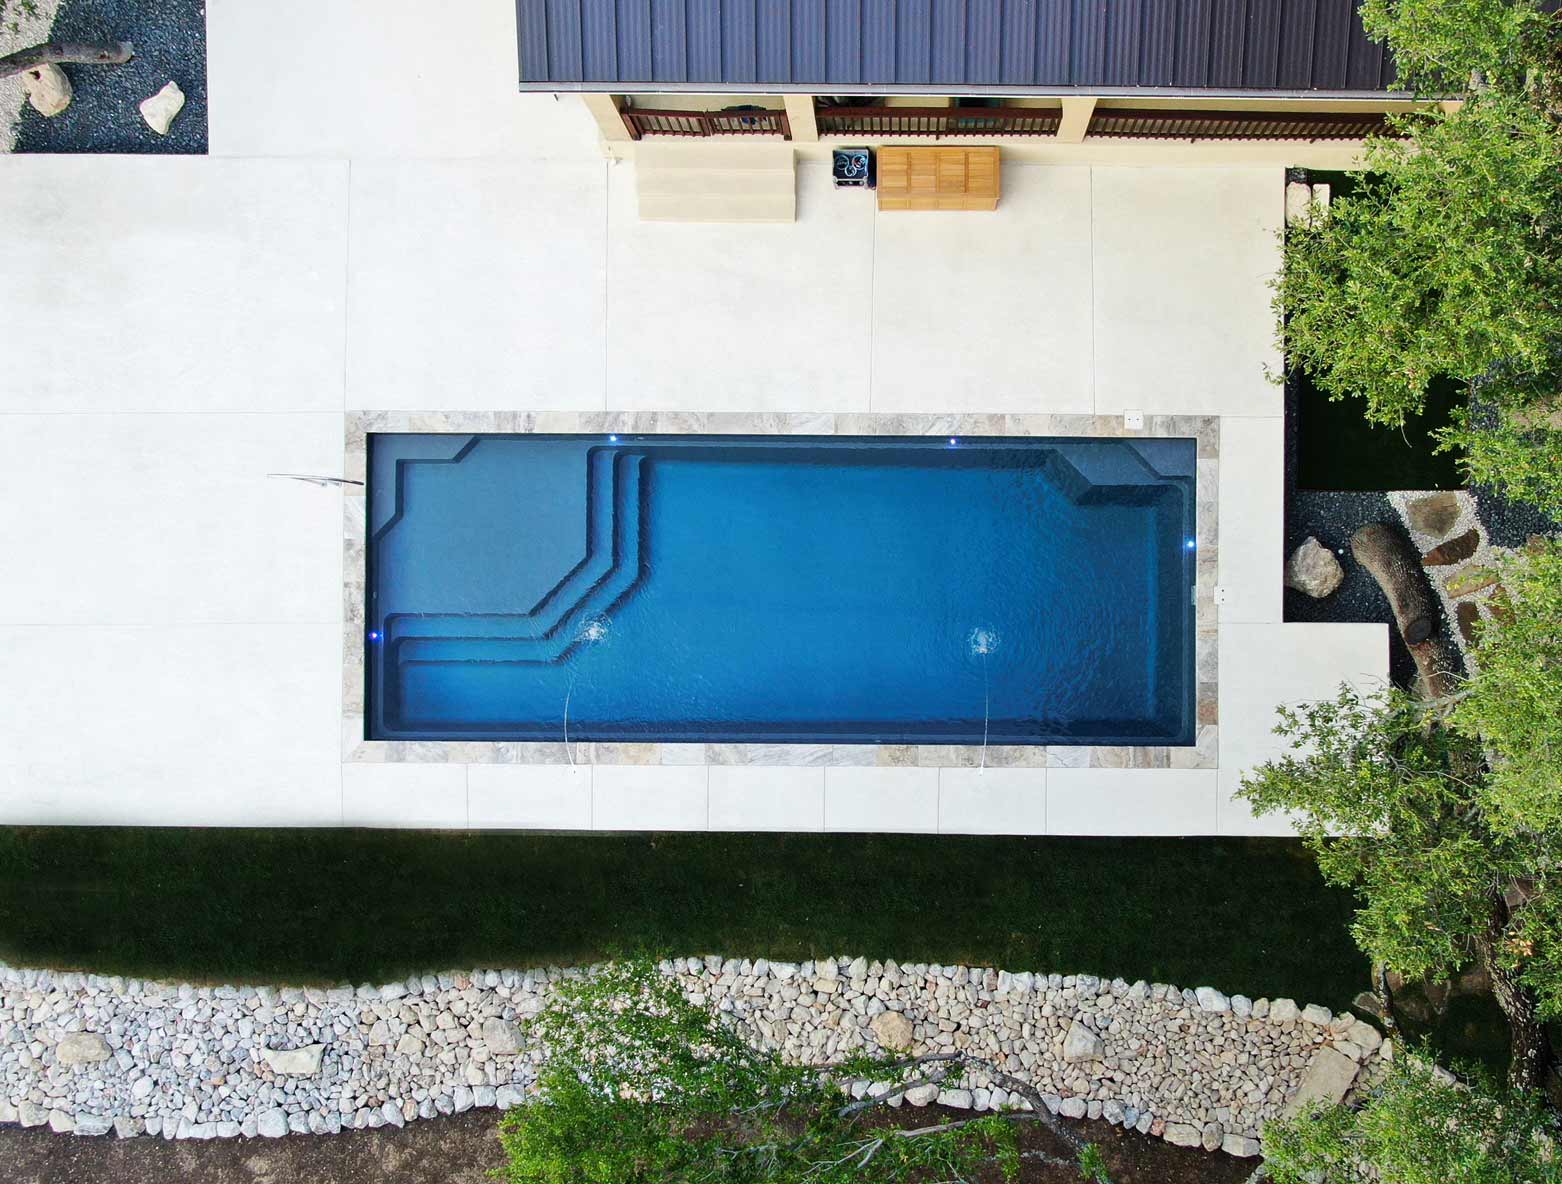 Vogue 40 model fiberglass pool from Aquamarine Pools